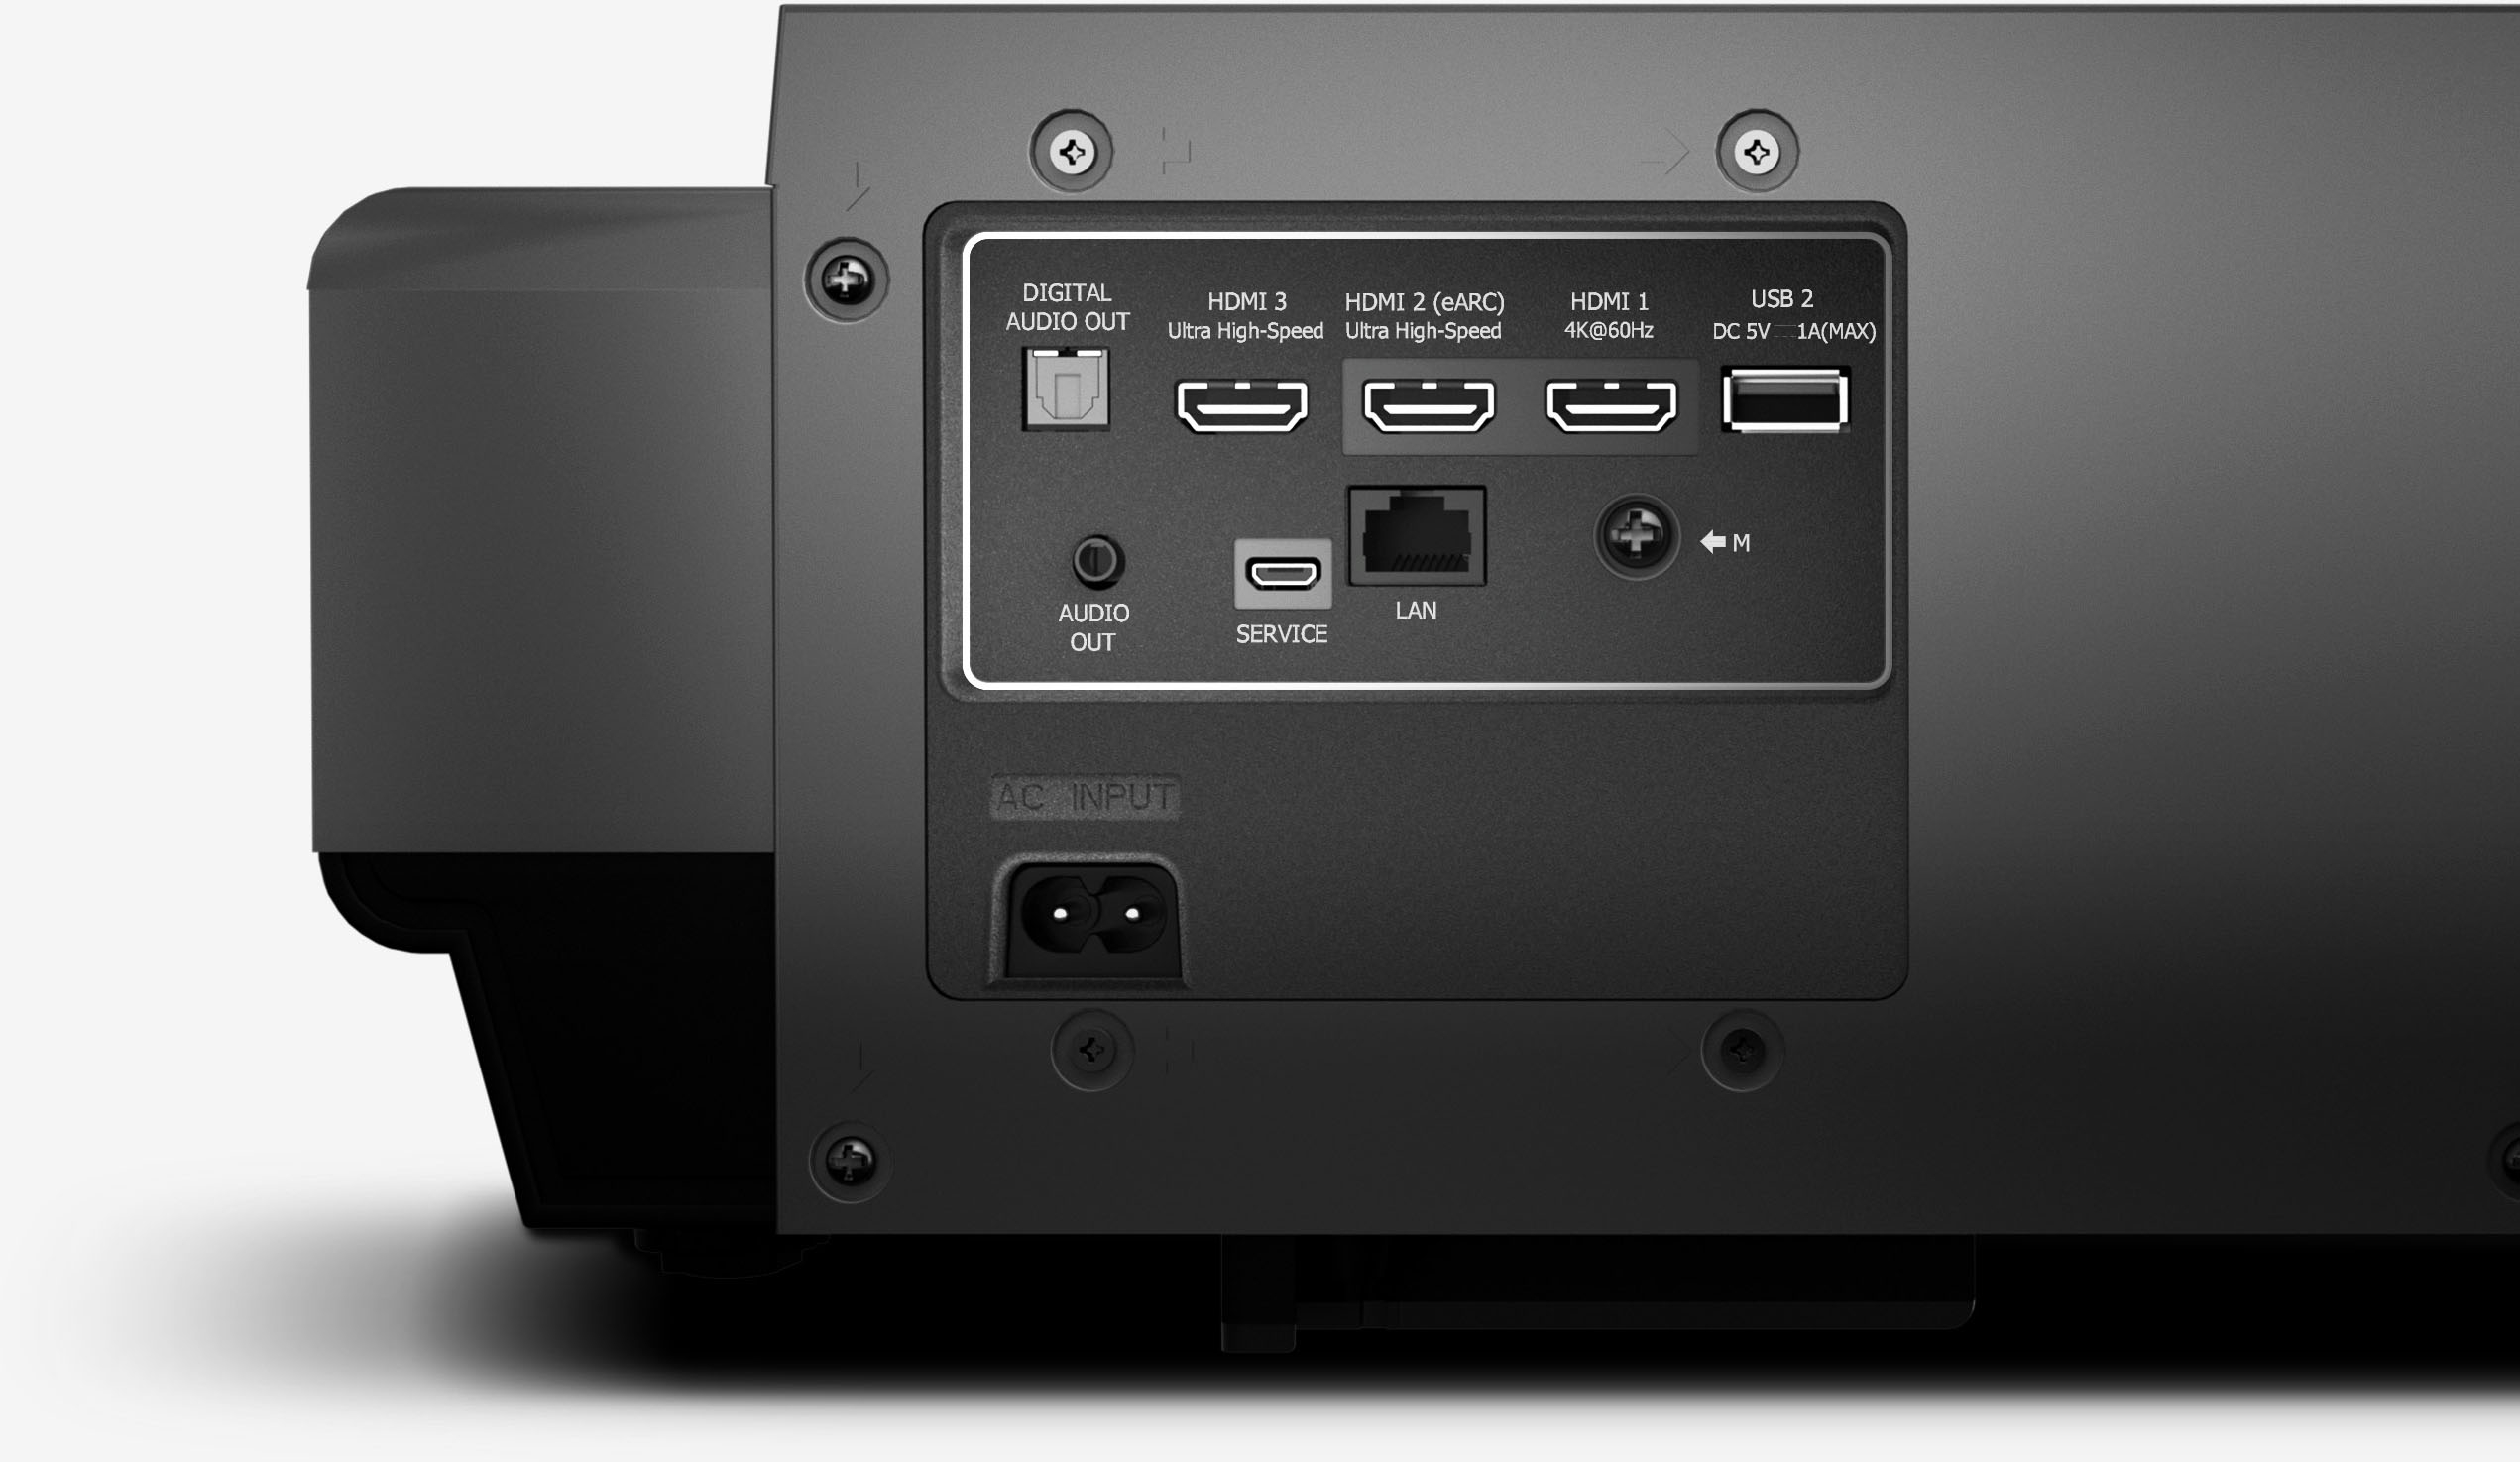 Hisense C1 4K TriChroma Laser Projector - Value Electronics